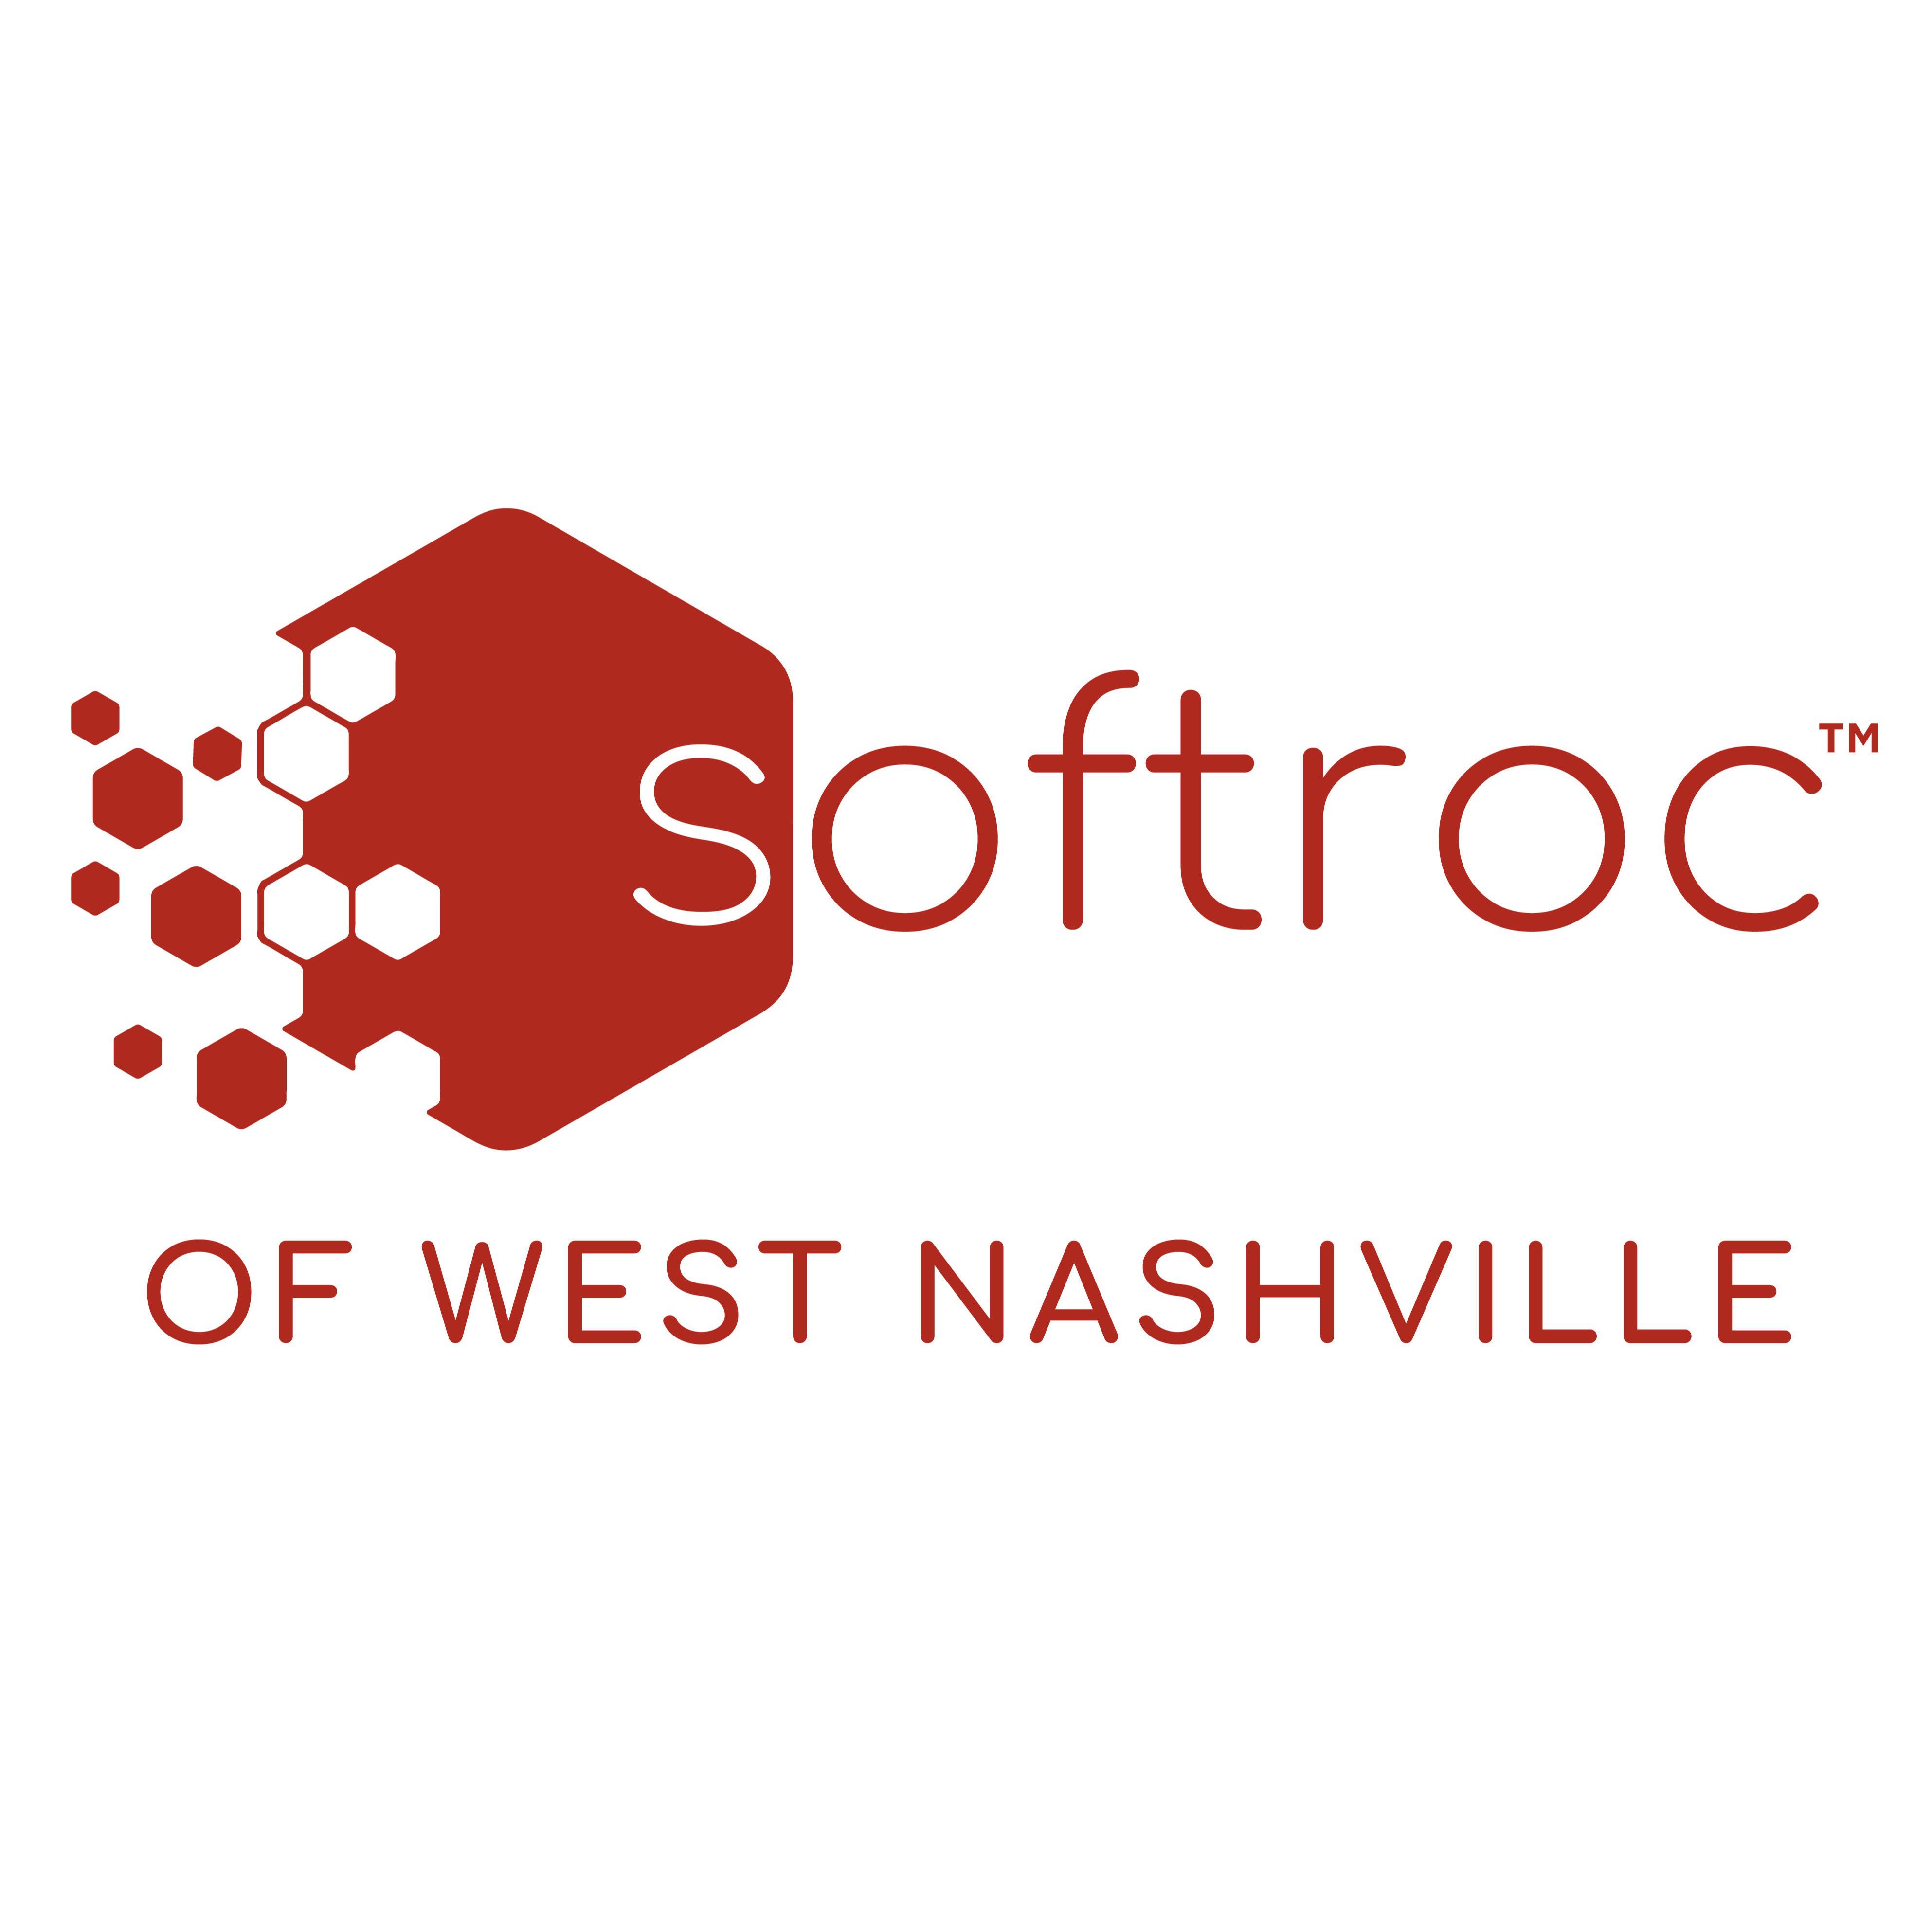 Softroc of West Nashville